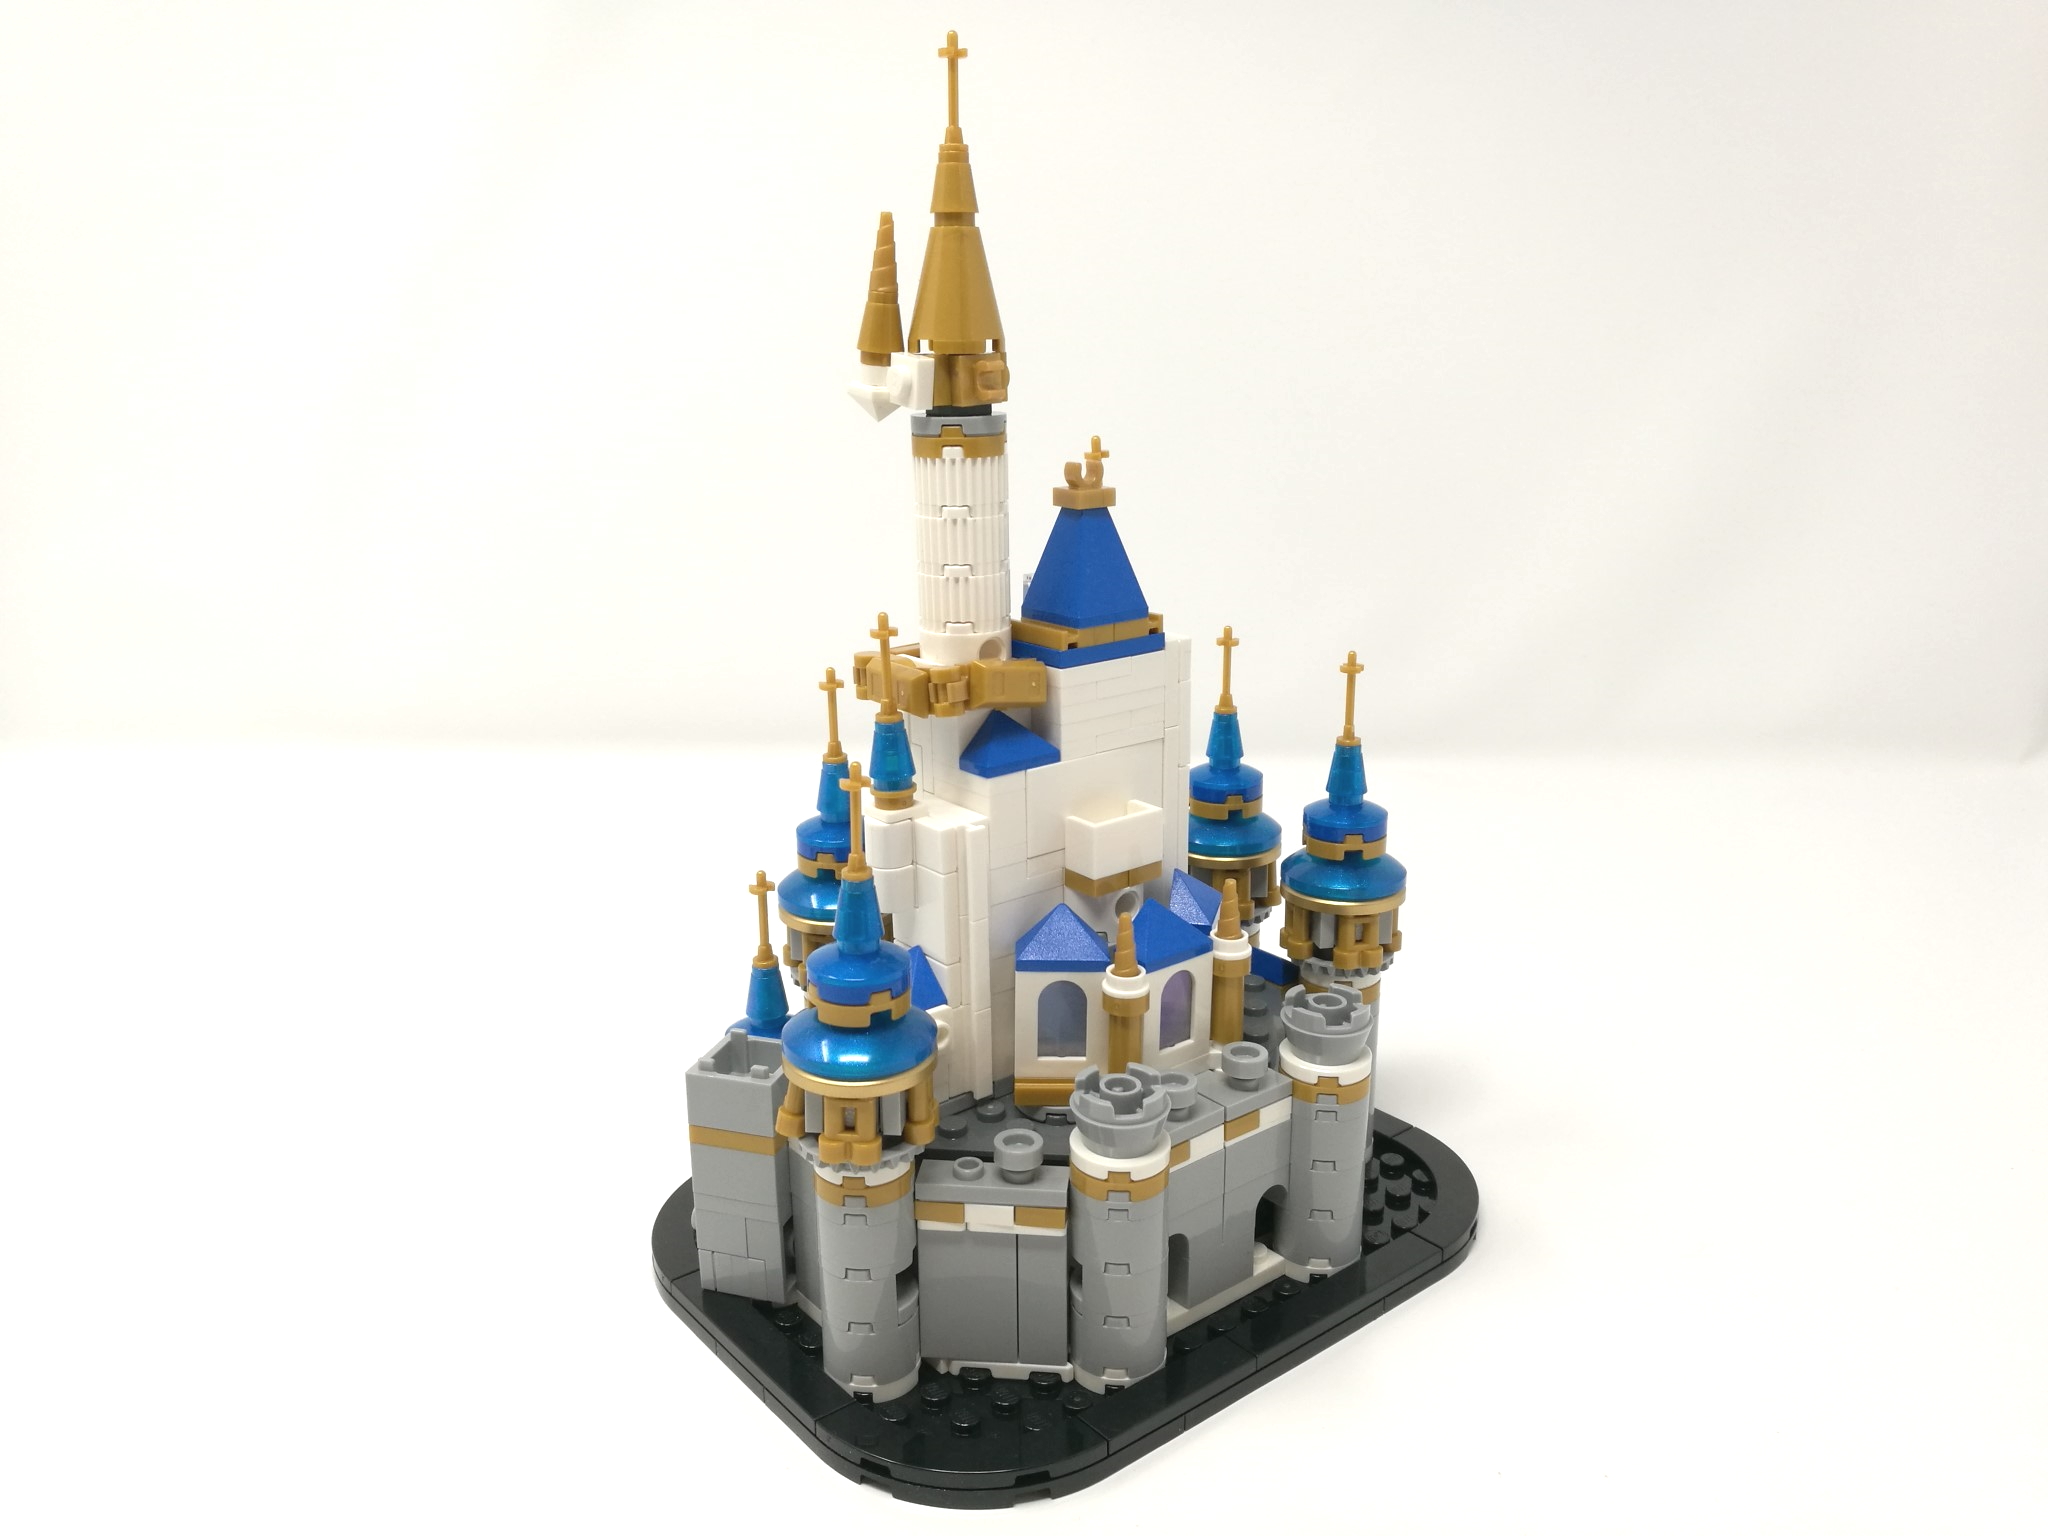 https://static.mattonito.com/wp-content/uploads/2022/01/LEGO-Disney-Mini-castello-Disney-40478-00012.jpg